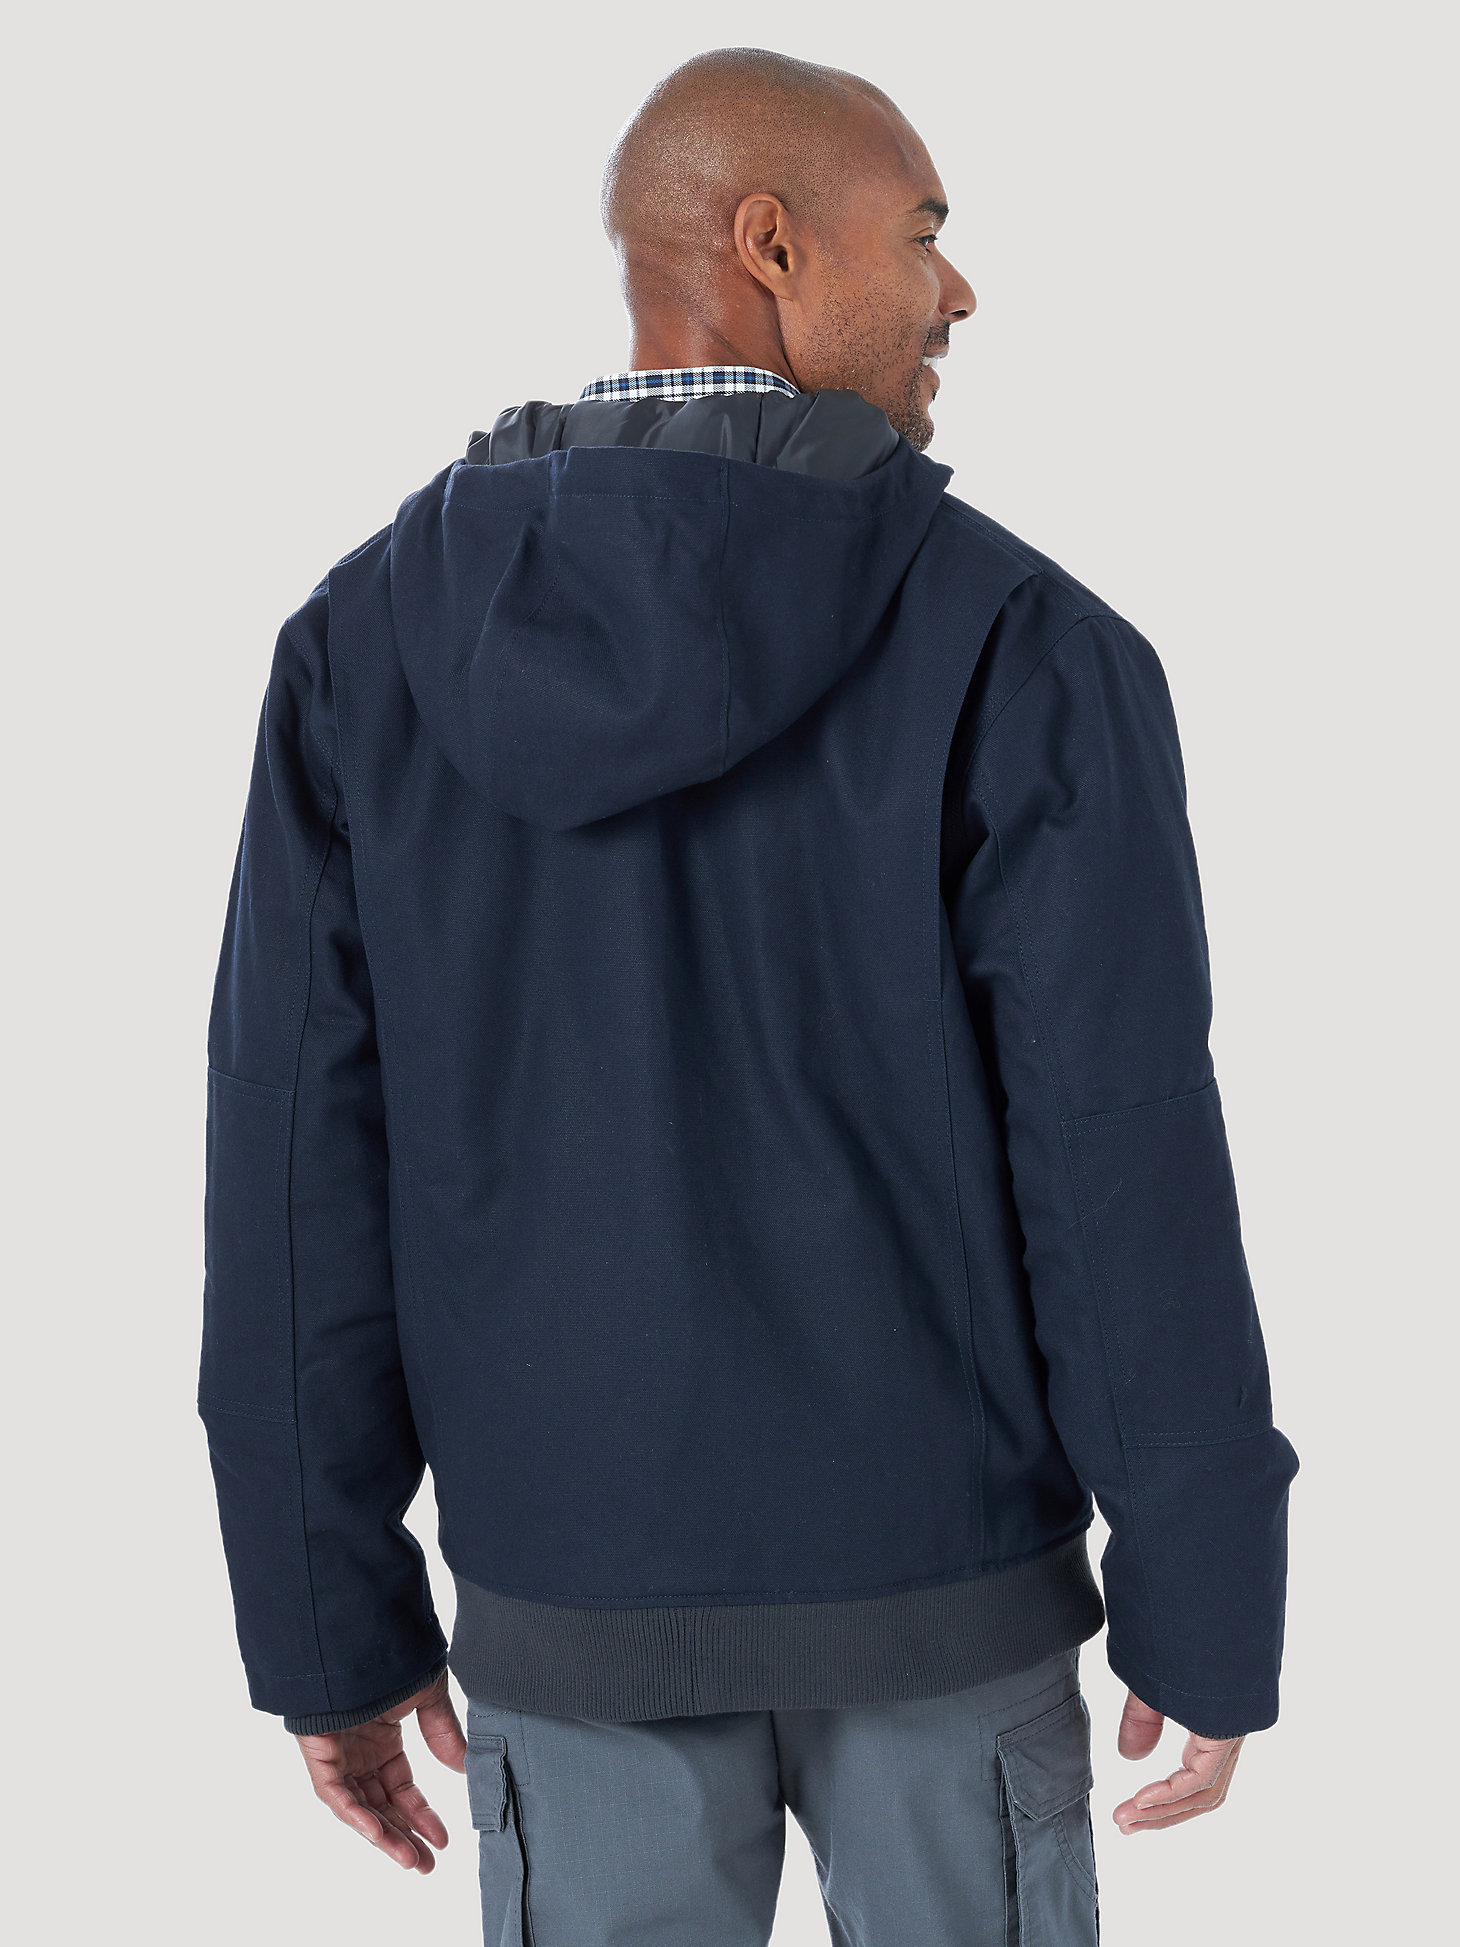 Wrangler® RIGGS Workwear® Tough Layers Insulated Canvas Work Jacket in Dark Navy alternative view 3